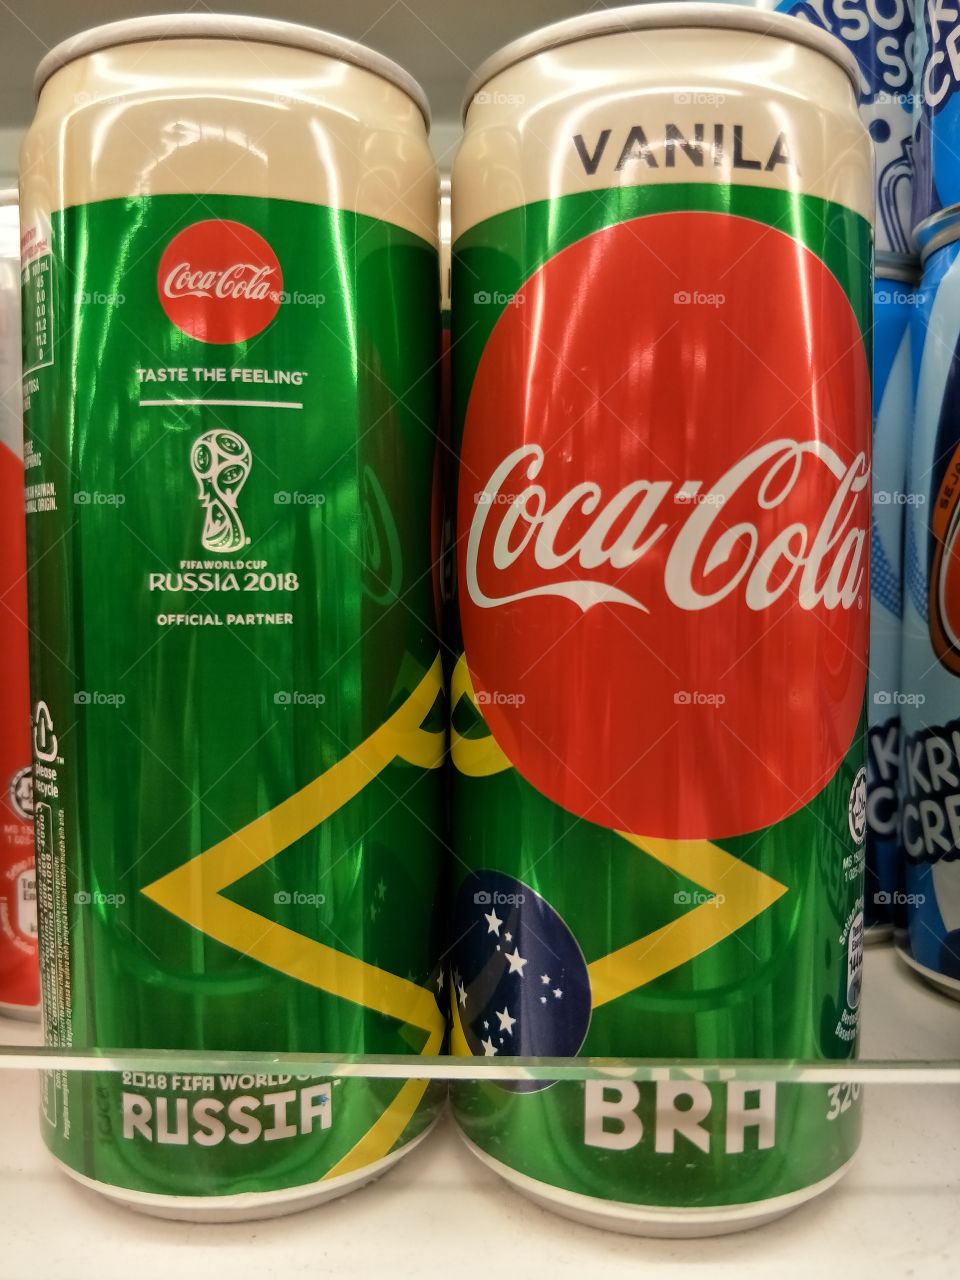 vanilla coke for world cup 2018